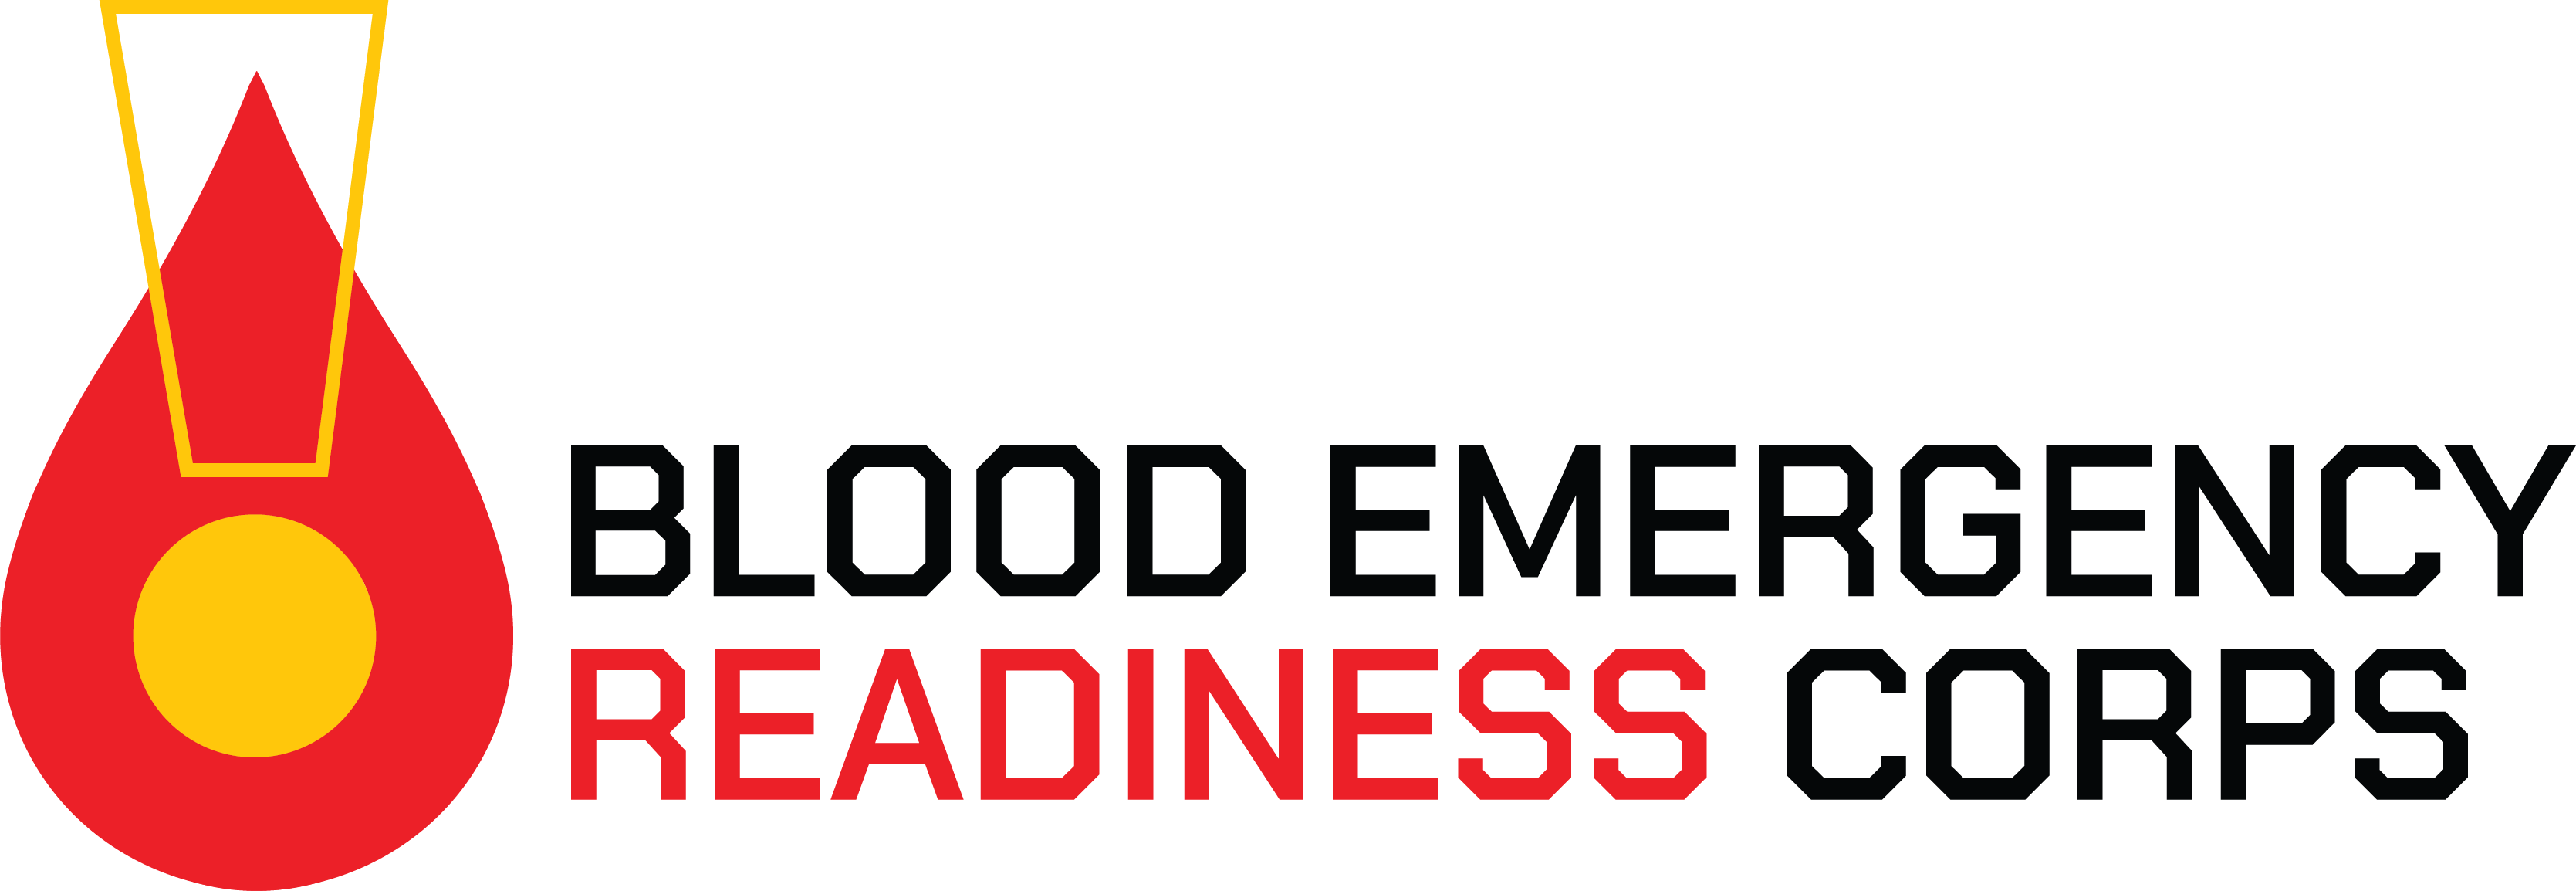 Blood Emergency Readiness Corps logo